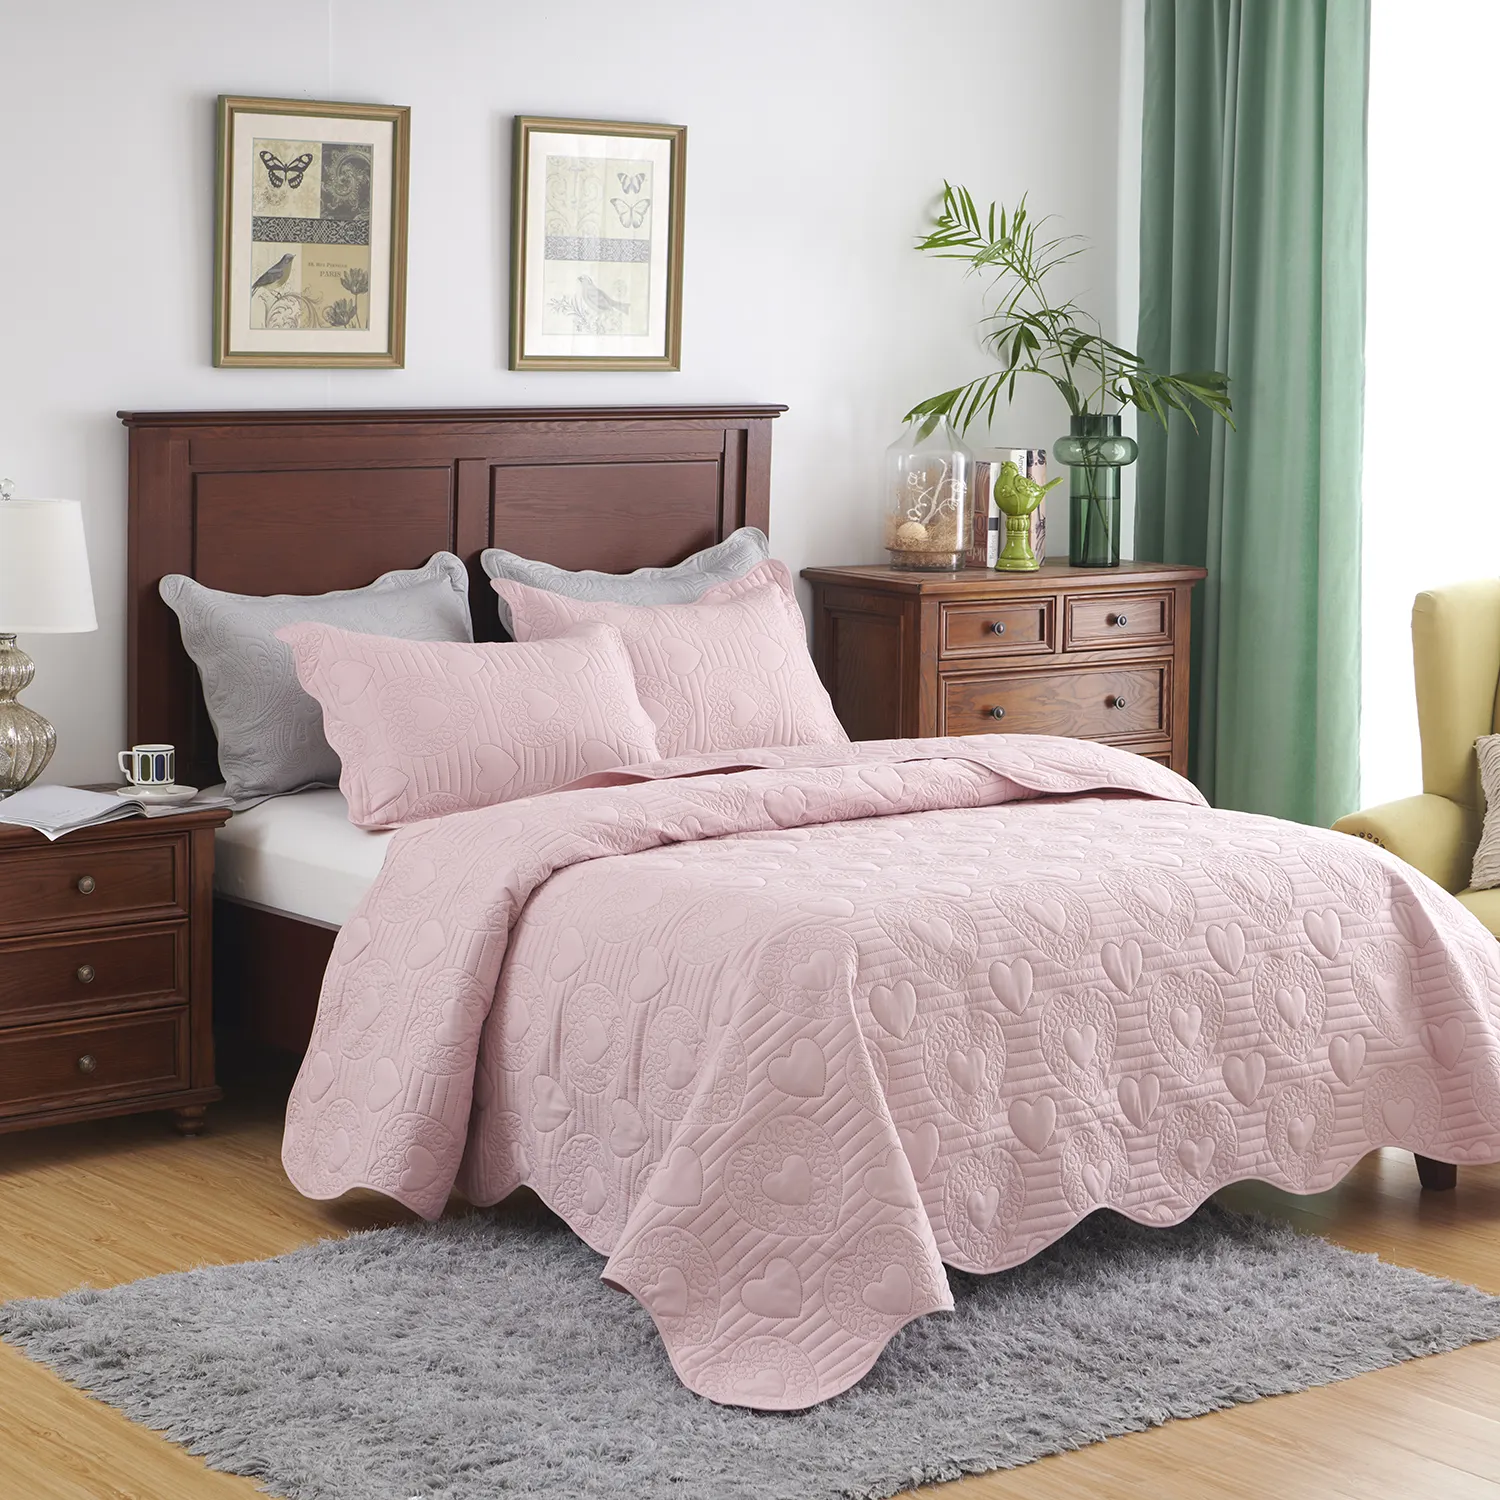 Patchwork Quilt Chinese Bedspread Cotton King Size Set Bedding Velvet Jacquard Style Bedspread